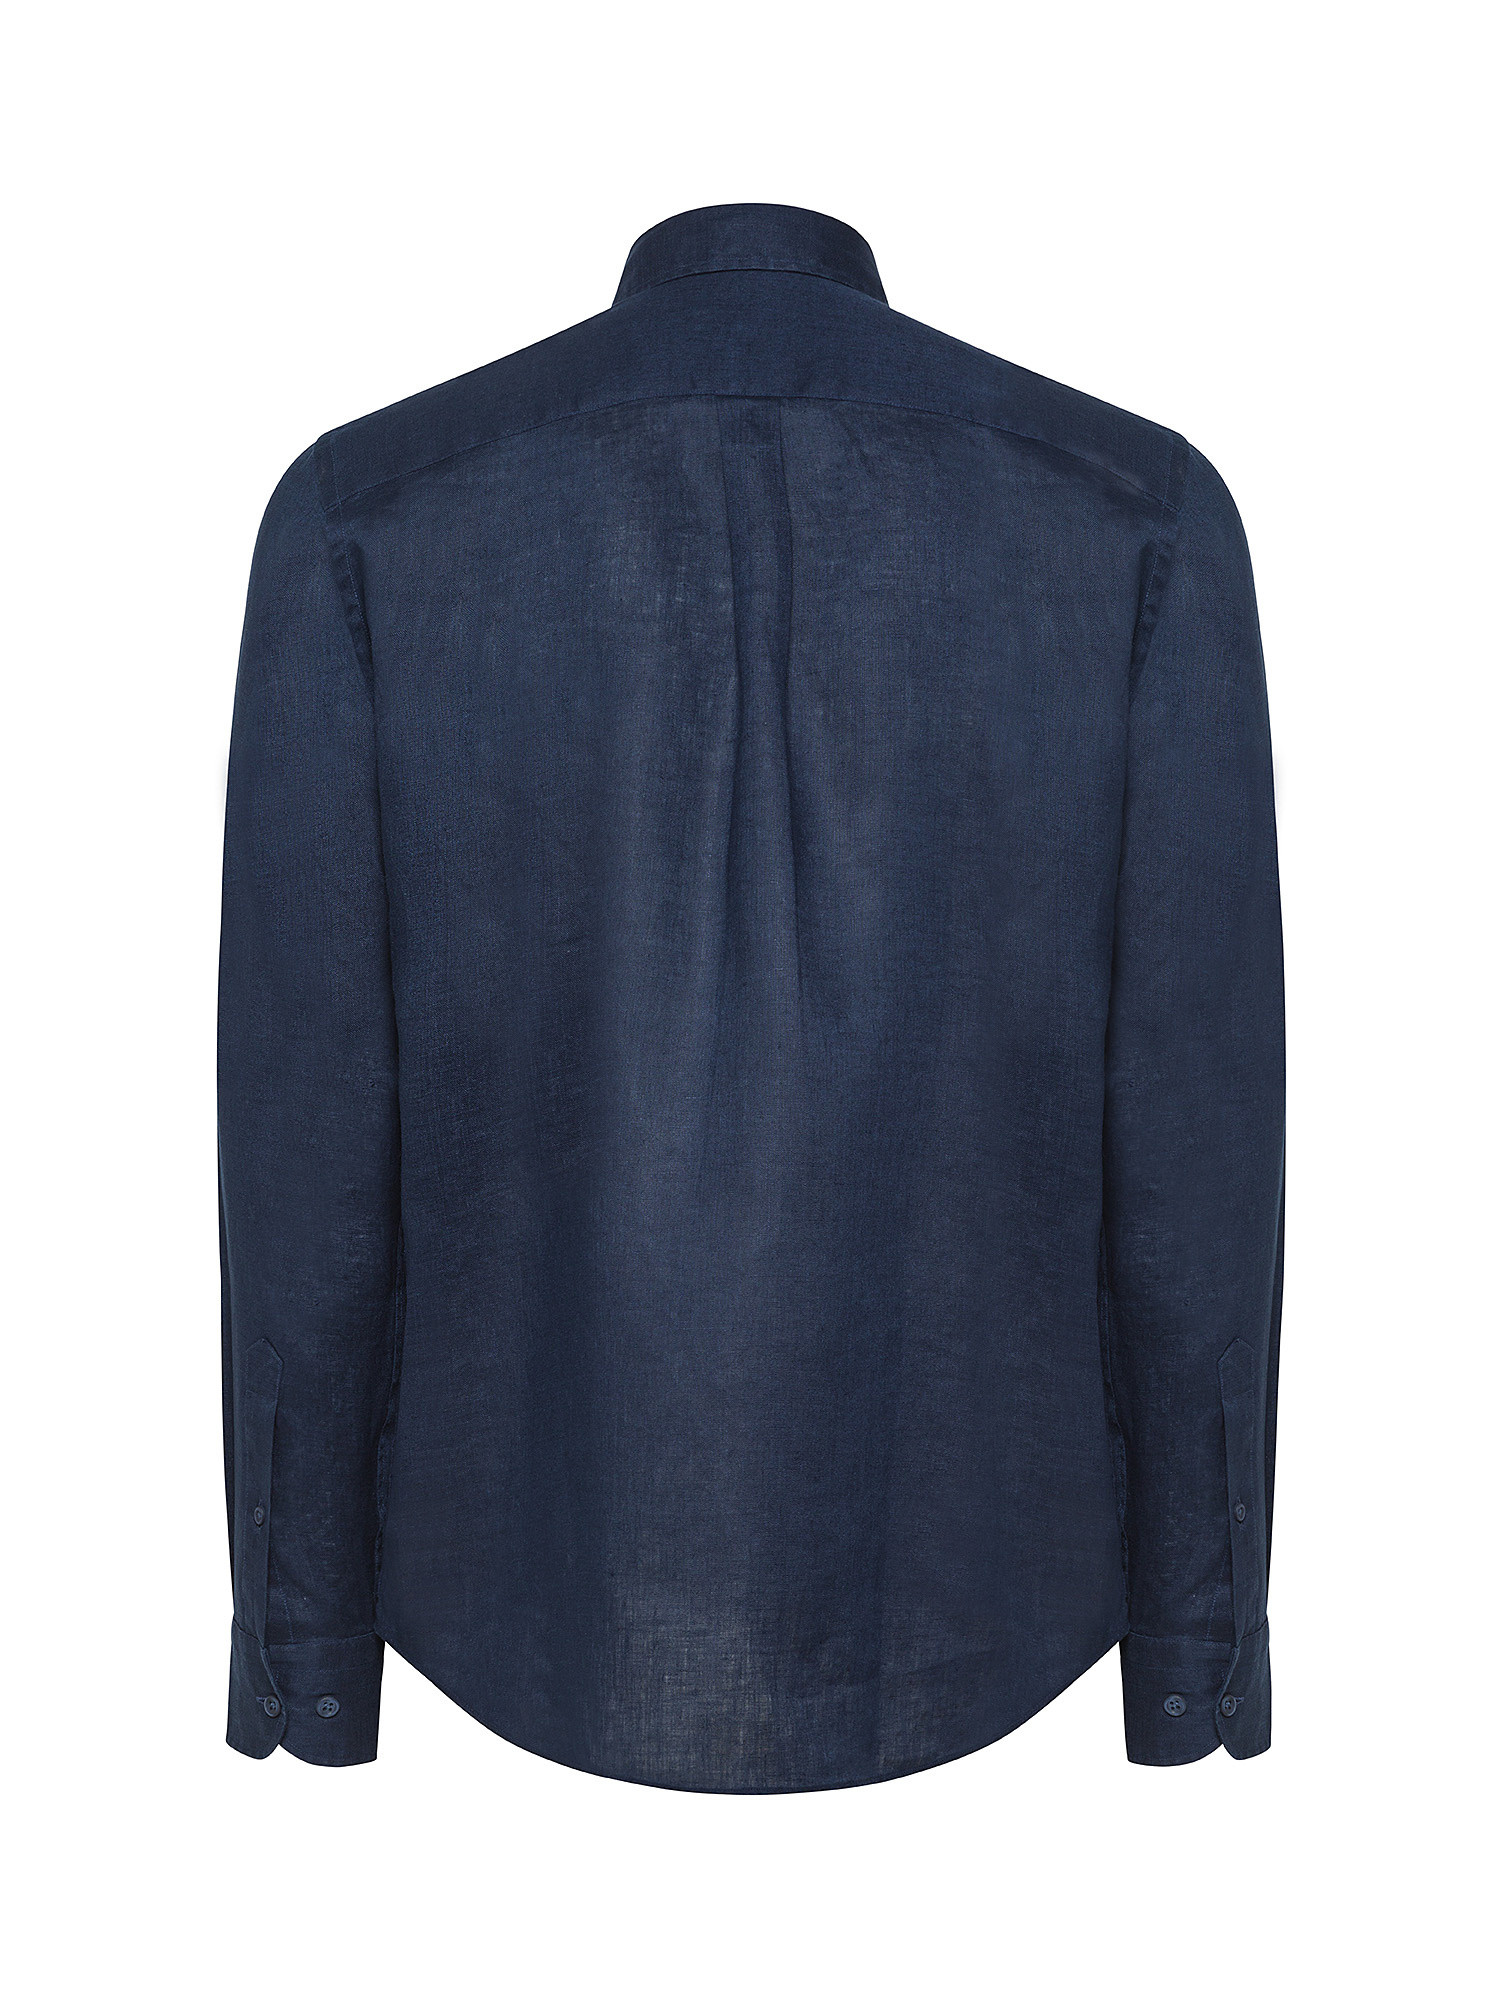 Luca D'Altieri - Camicia tailor fit in puro lino, Blu scuro, large image number 1